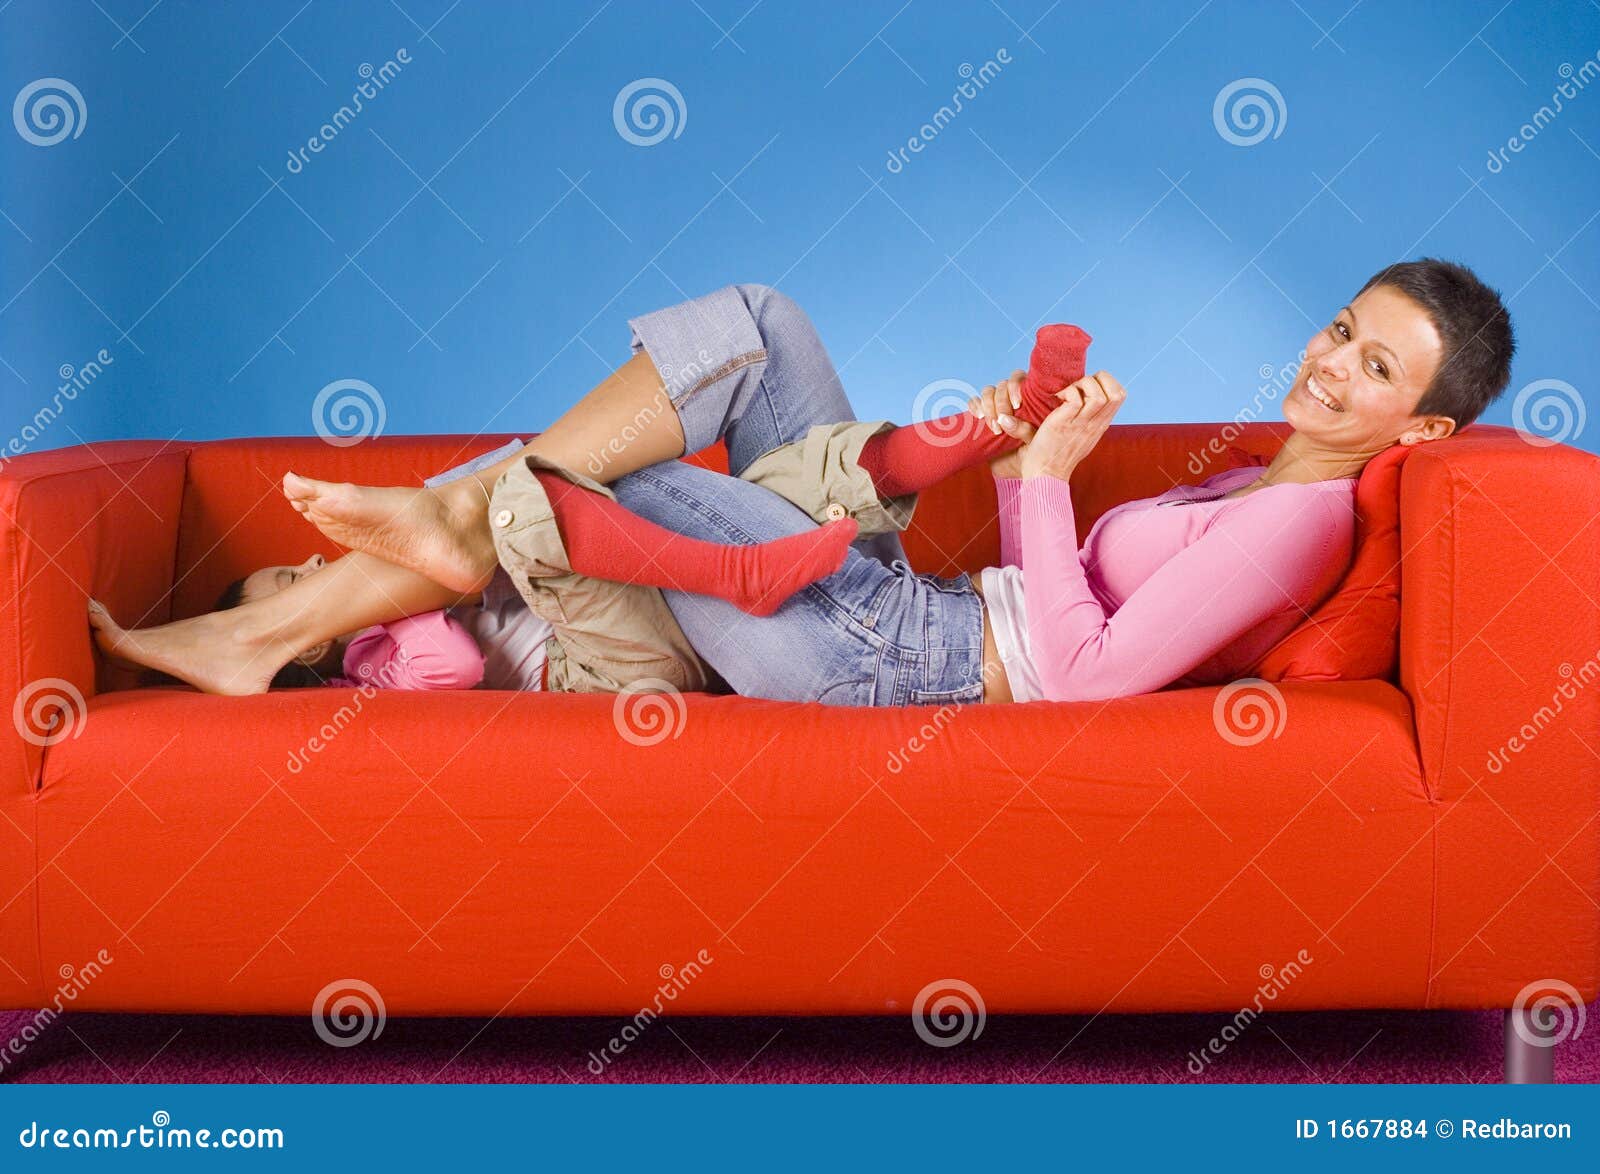 Мама друга на диване. Пятки девушки на диване. Щекочет кресло. Щекотка детей на диване. Девочки щекотят друг друга.